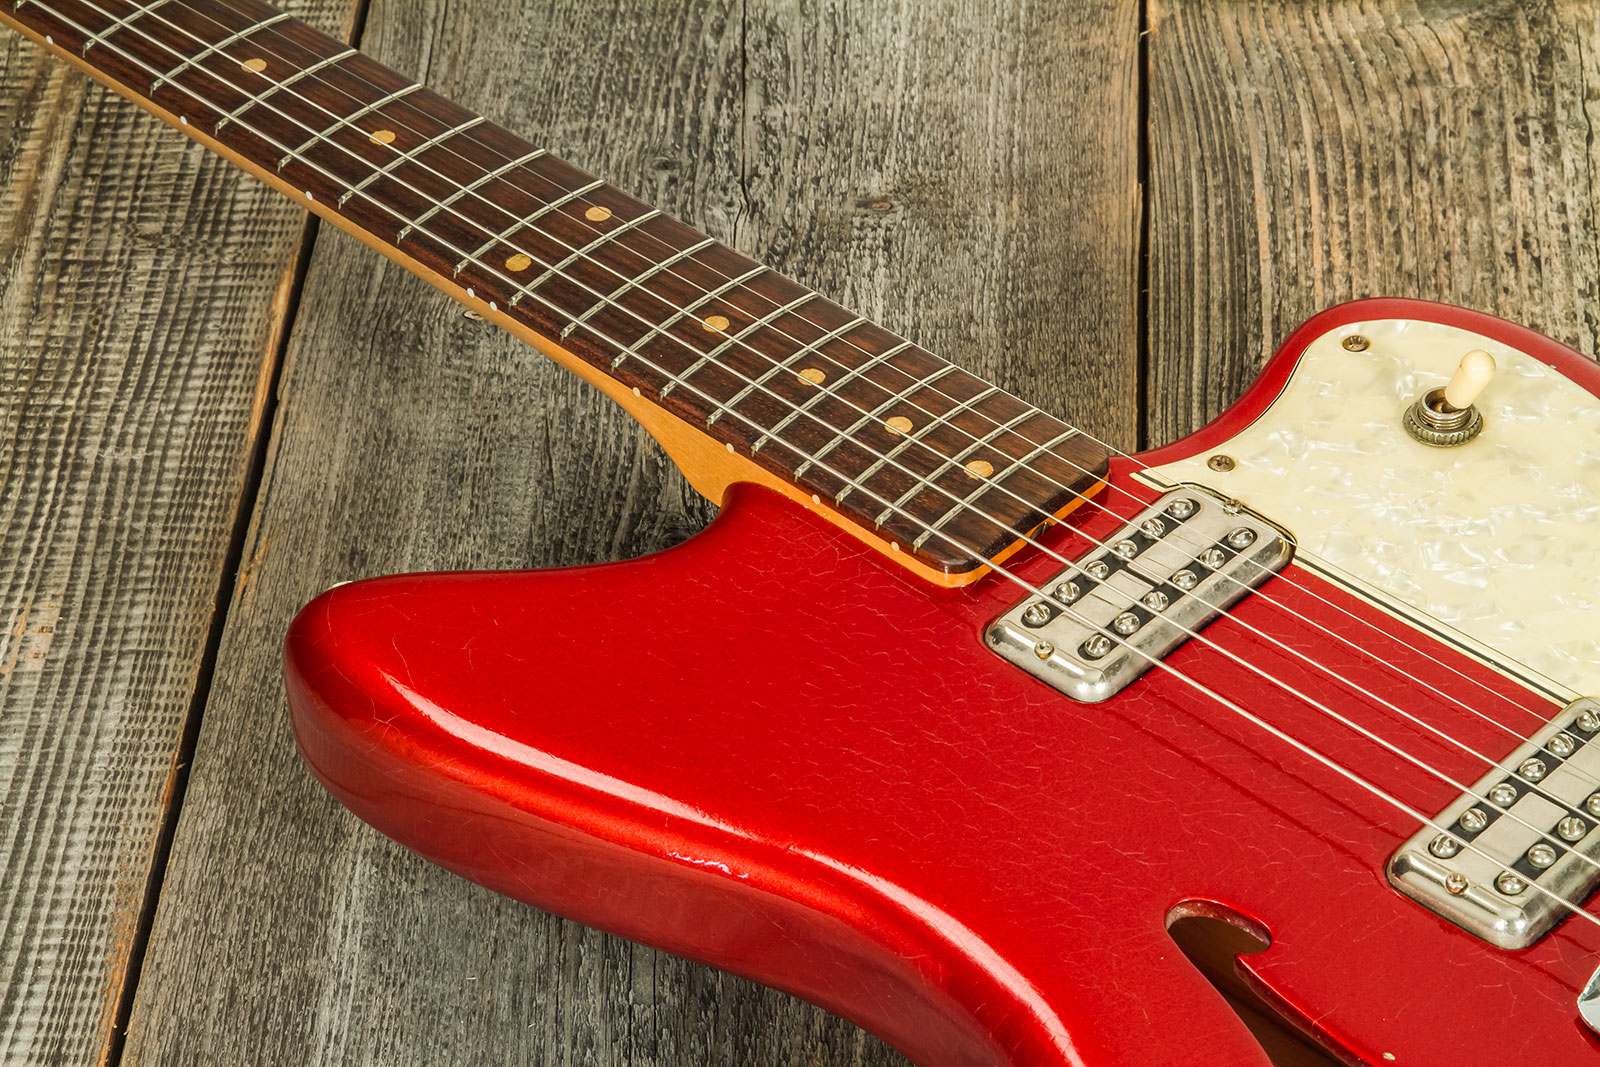 Rebelrelic Wrangler 2h Trem Rw #62175 - Light Aged Candy Apple Red - Guitare Électrique 1/2 Caisse - Variation 3